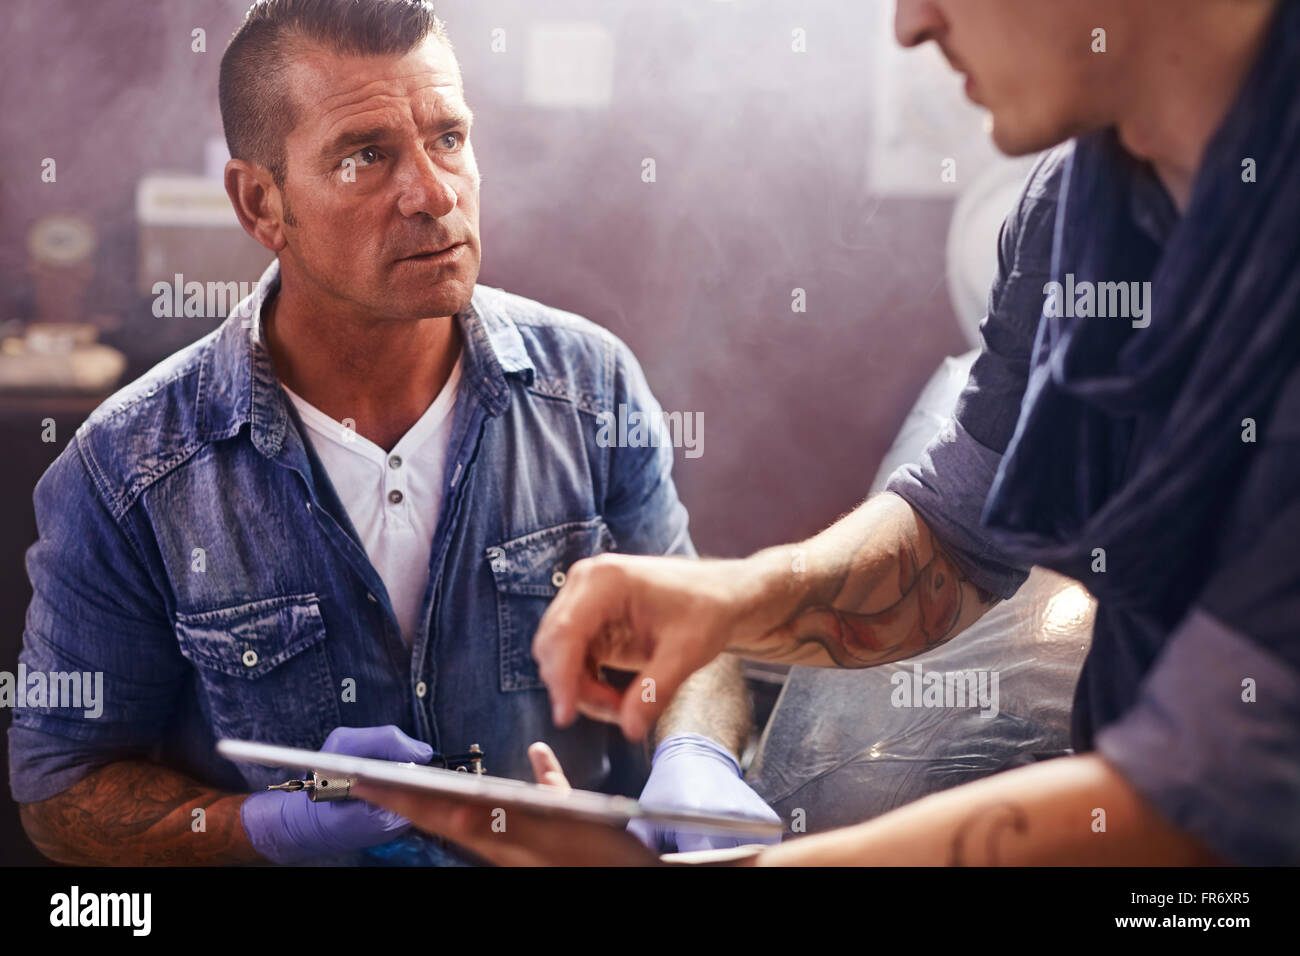 Man with digital tablet talking to tattoo artist Stock Photo